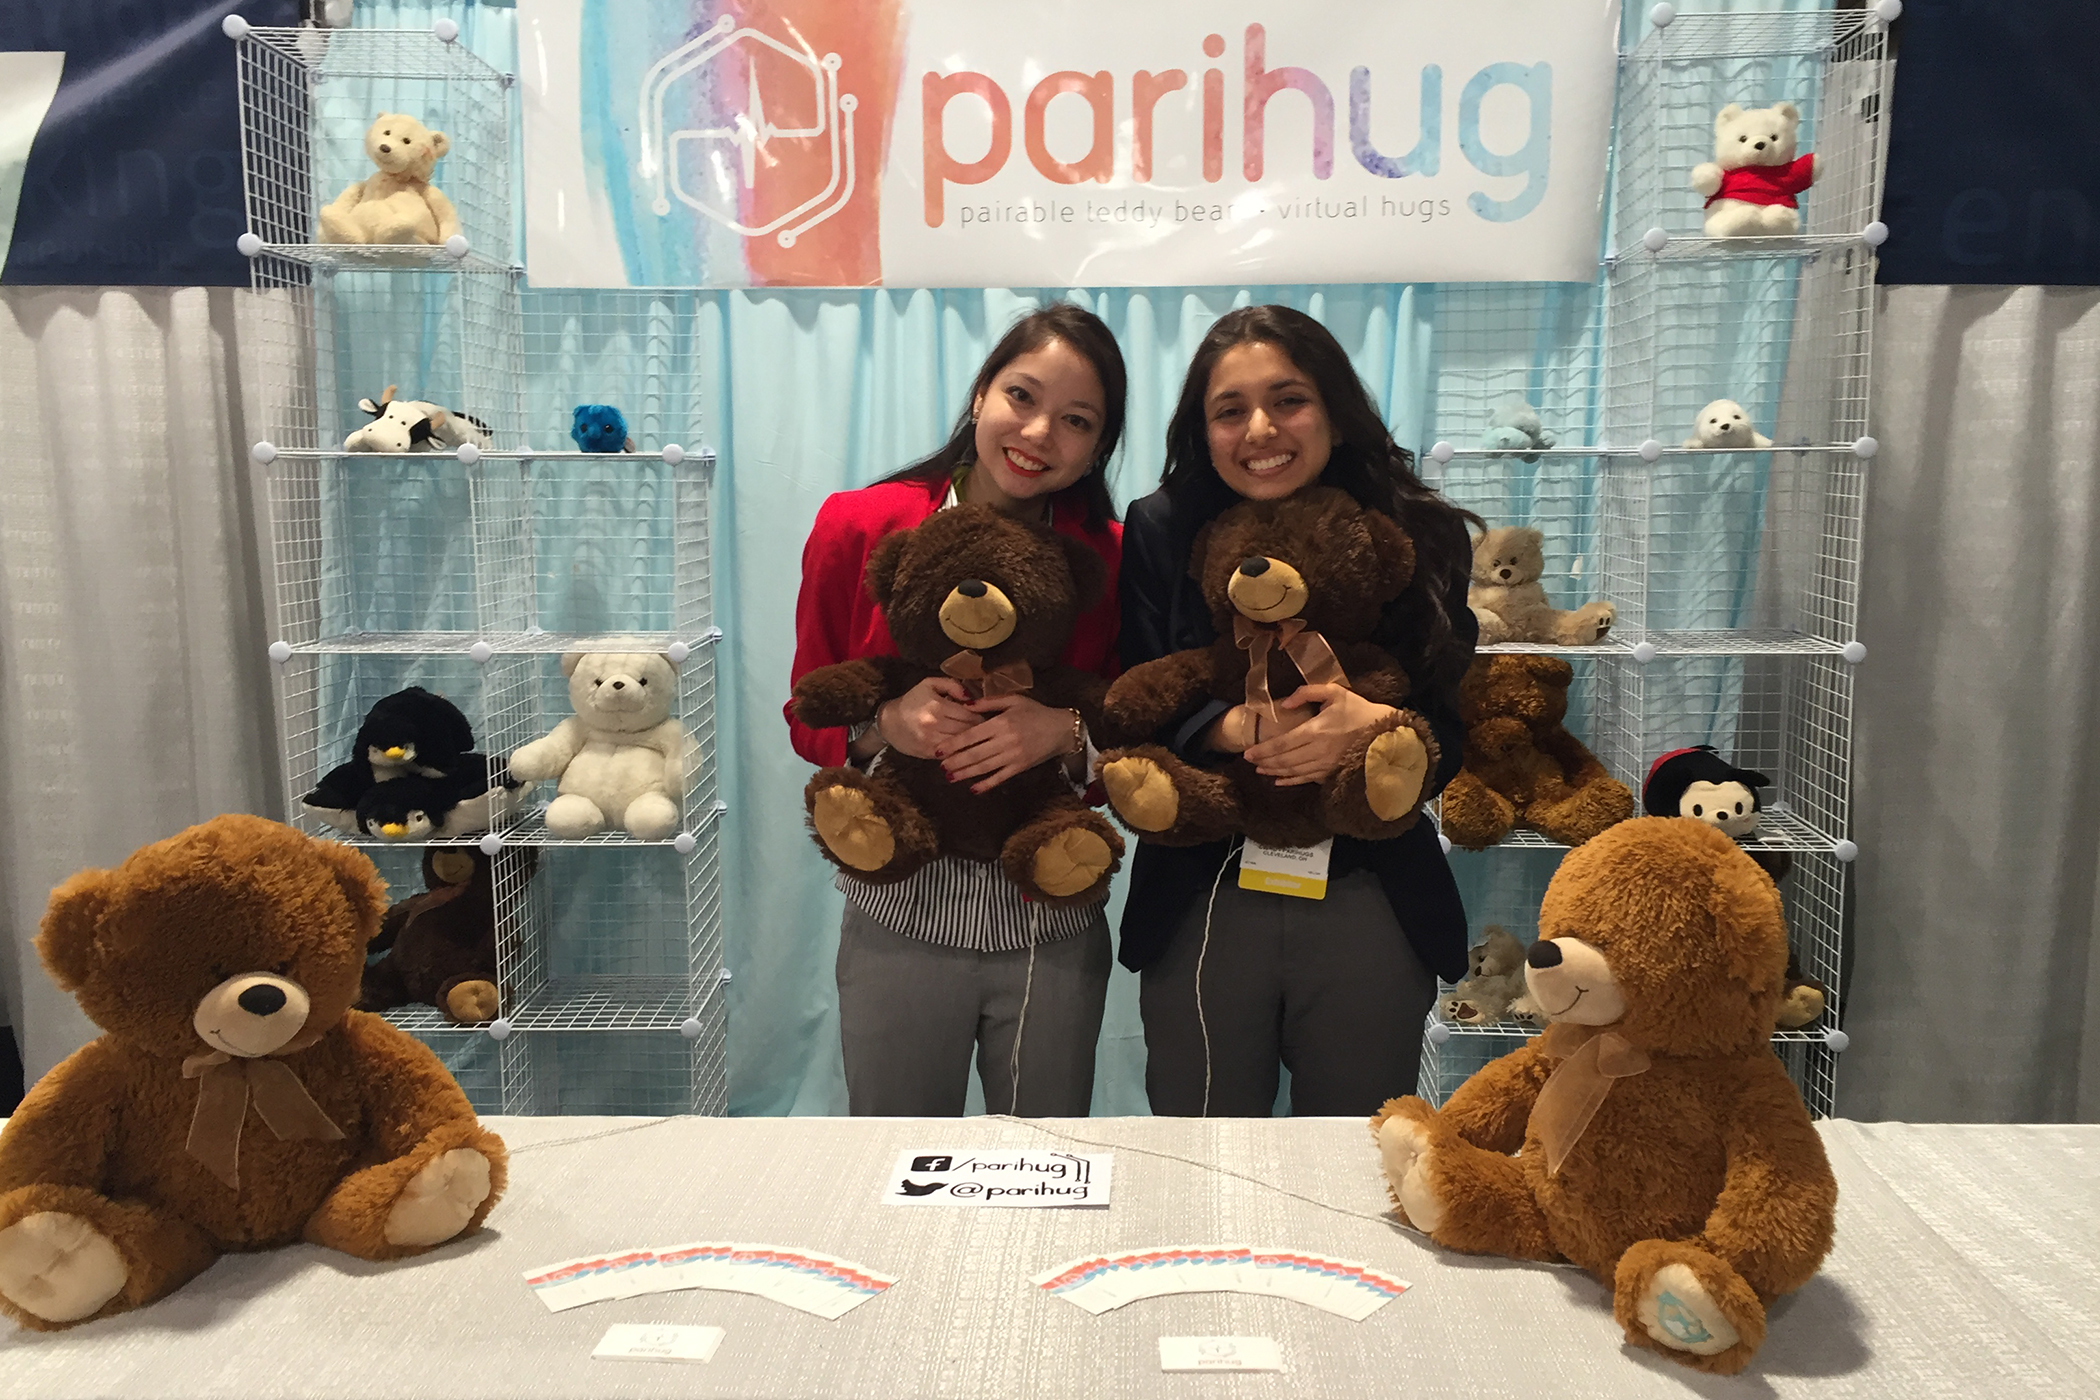 Parihug co-founders Xyla Foxlin and Harshita Gupta